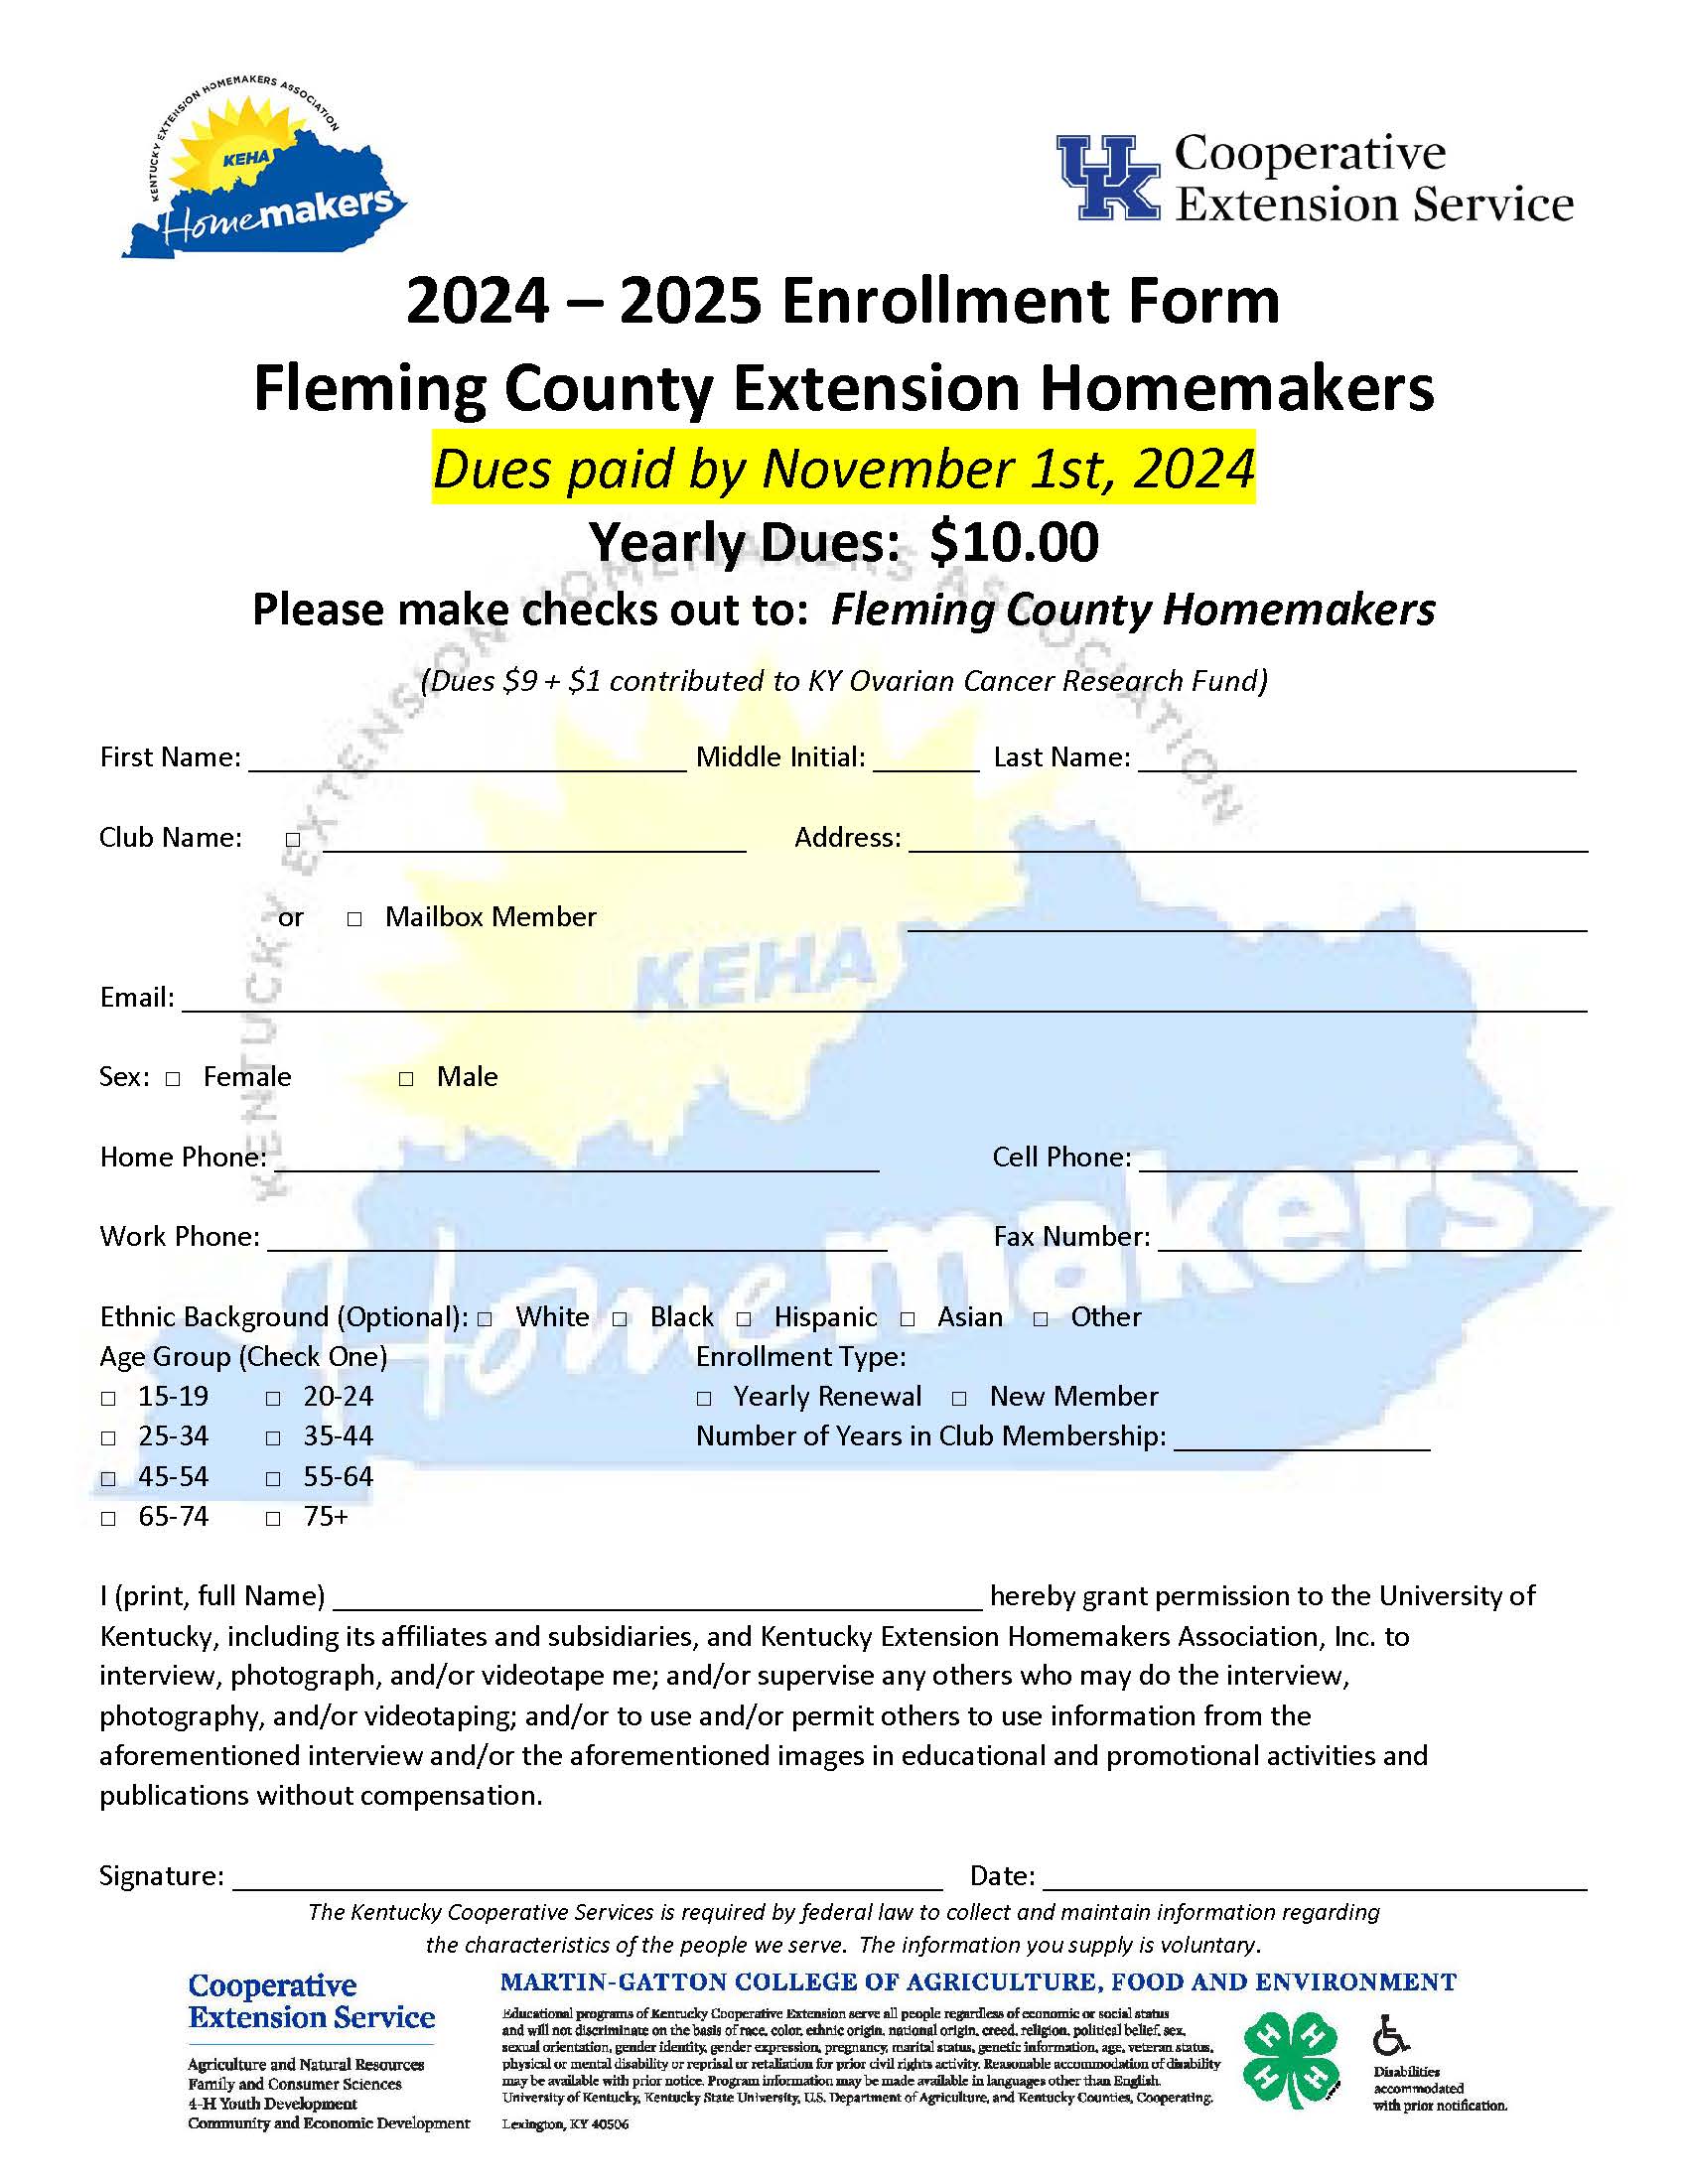 2024-2025 HM Enrollment Form